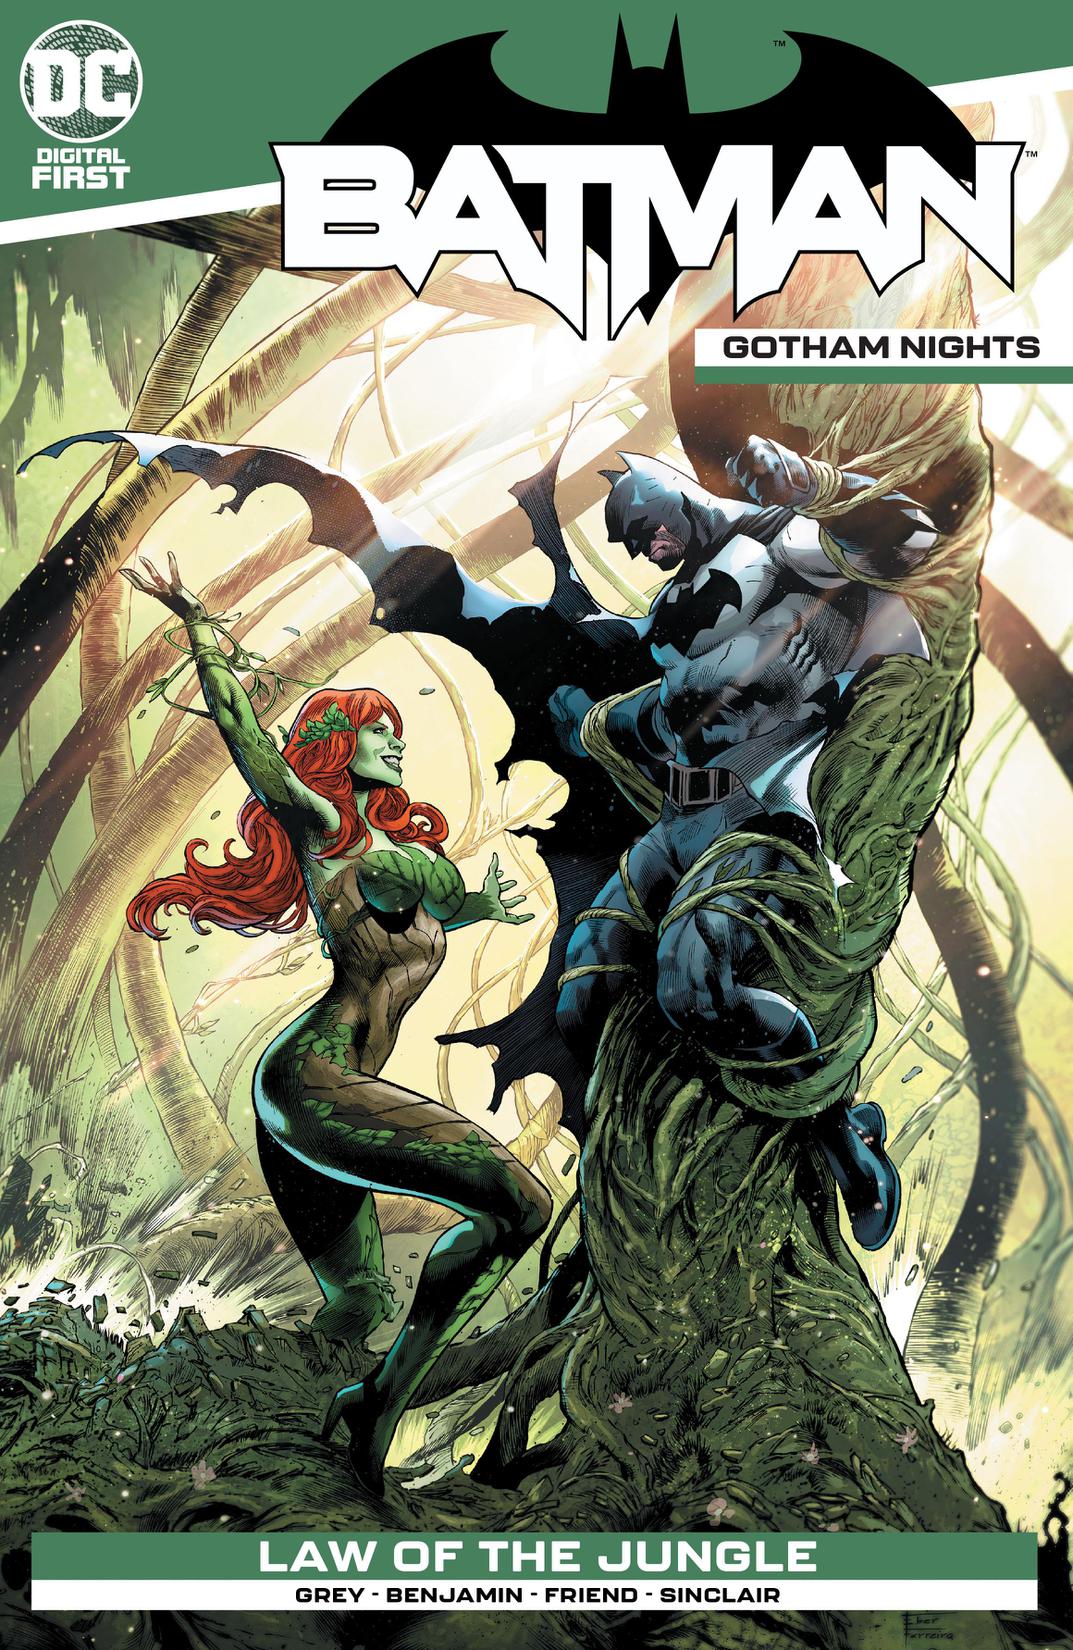 Batman: Gotham Nights #3 preview images